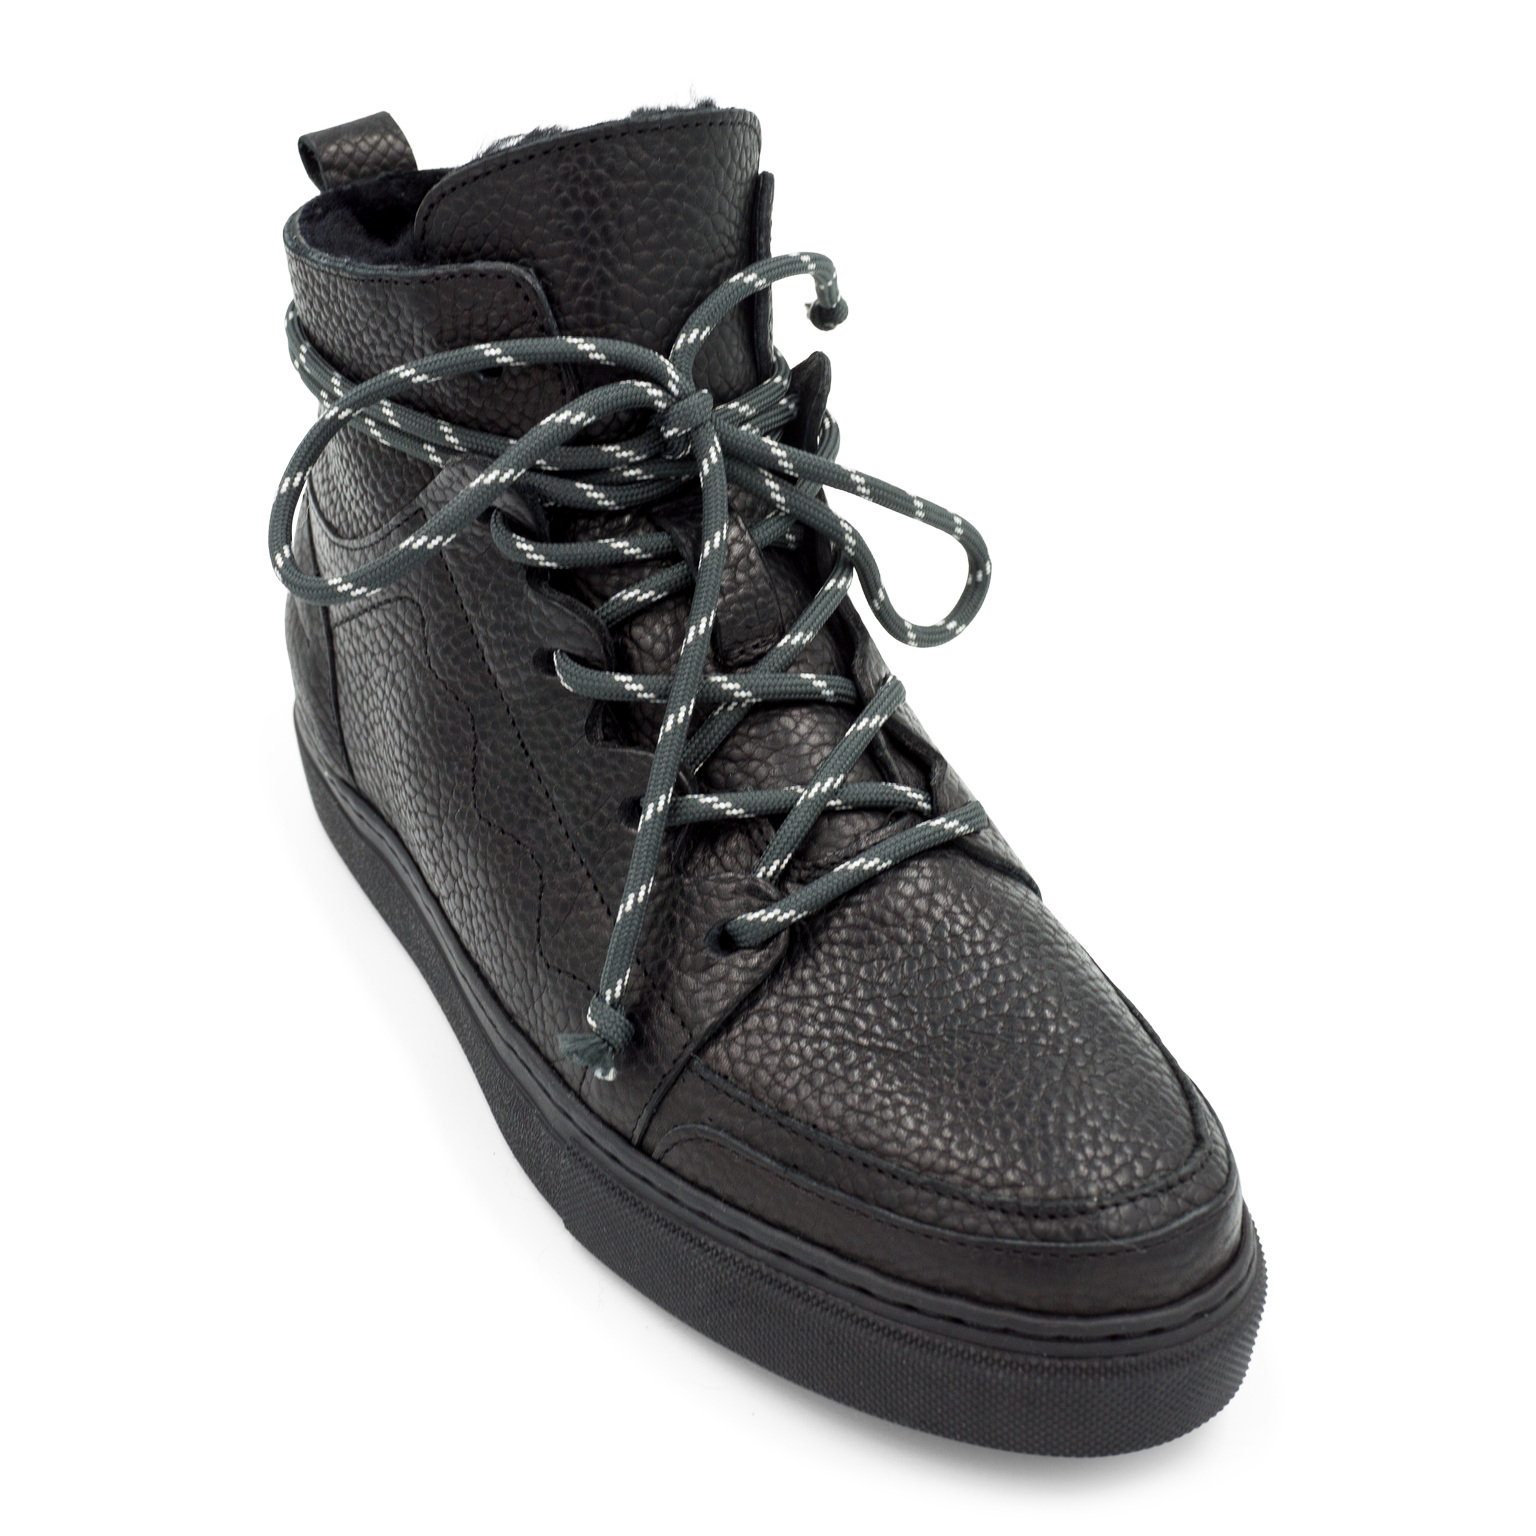 Winter Shoes -  inuikii MEN Sneaker Low Top Leather Black